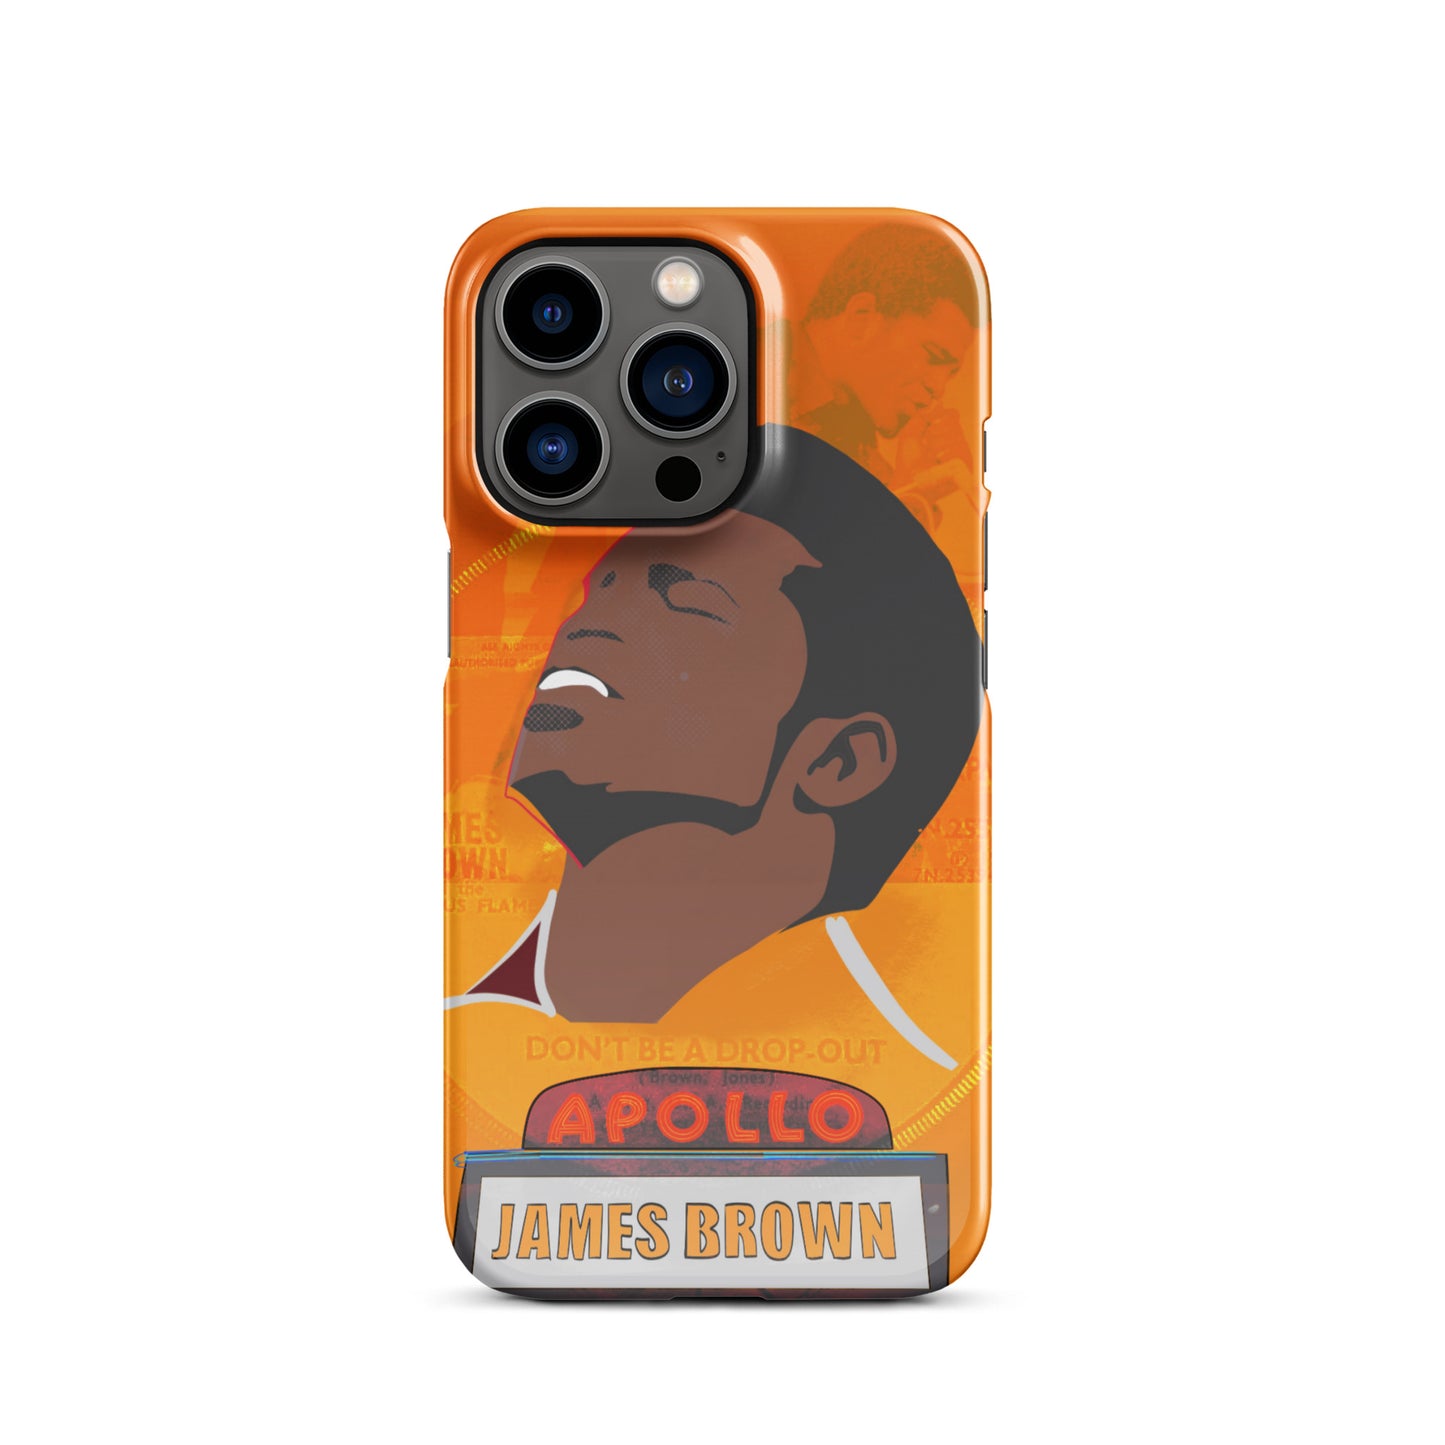 James Brown’s Custom iPhone Case - Art for Change